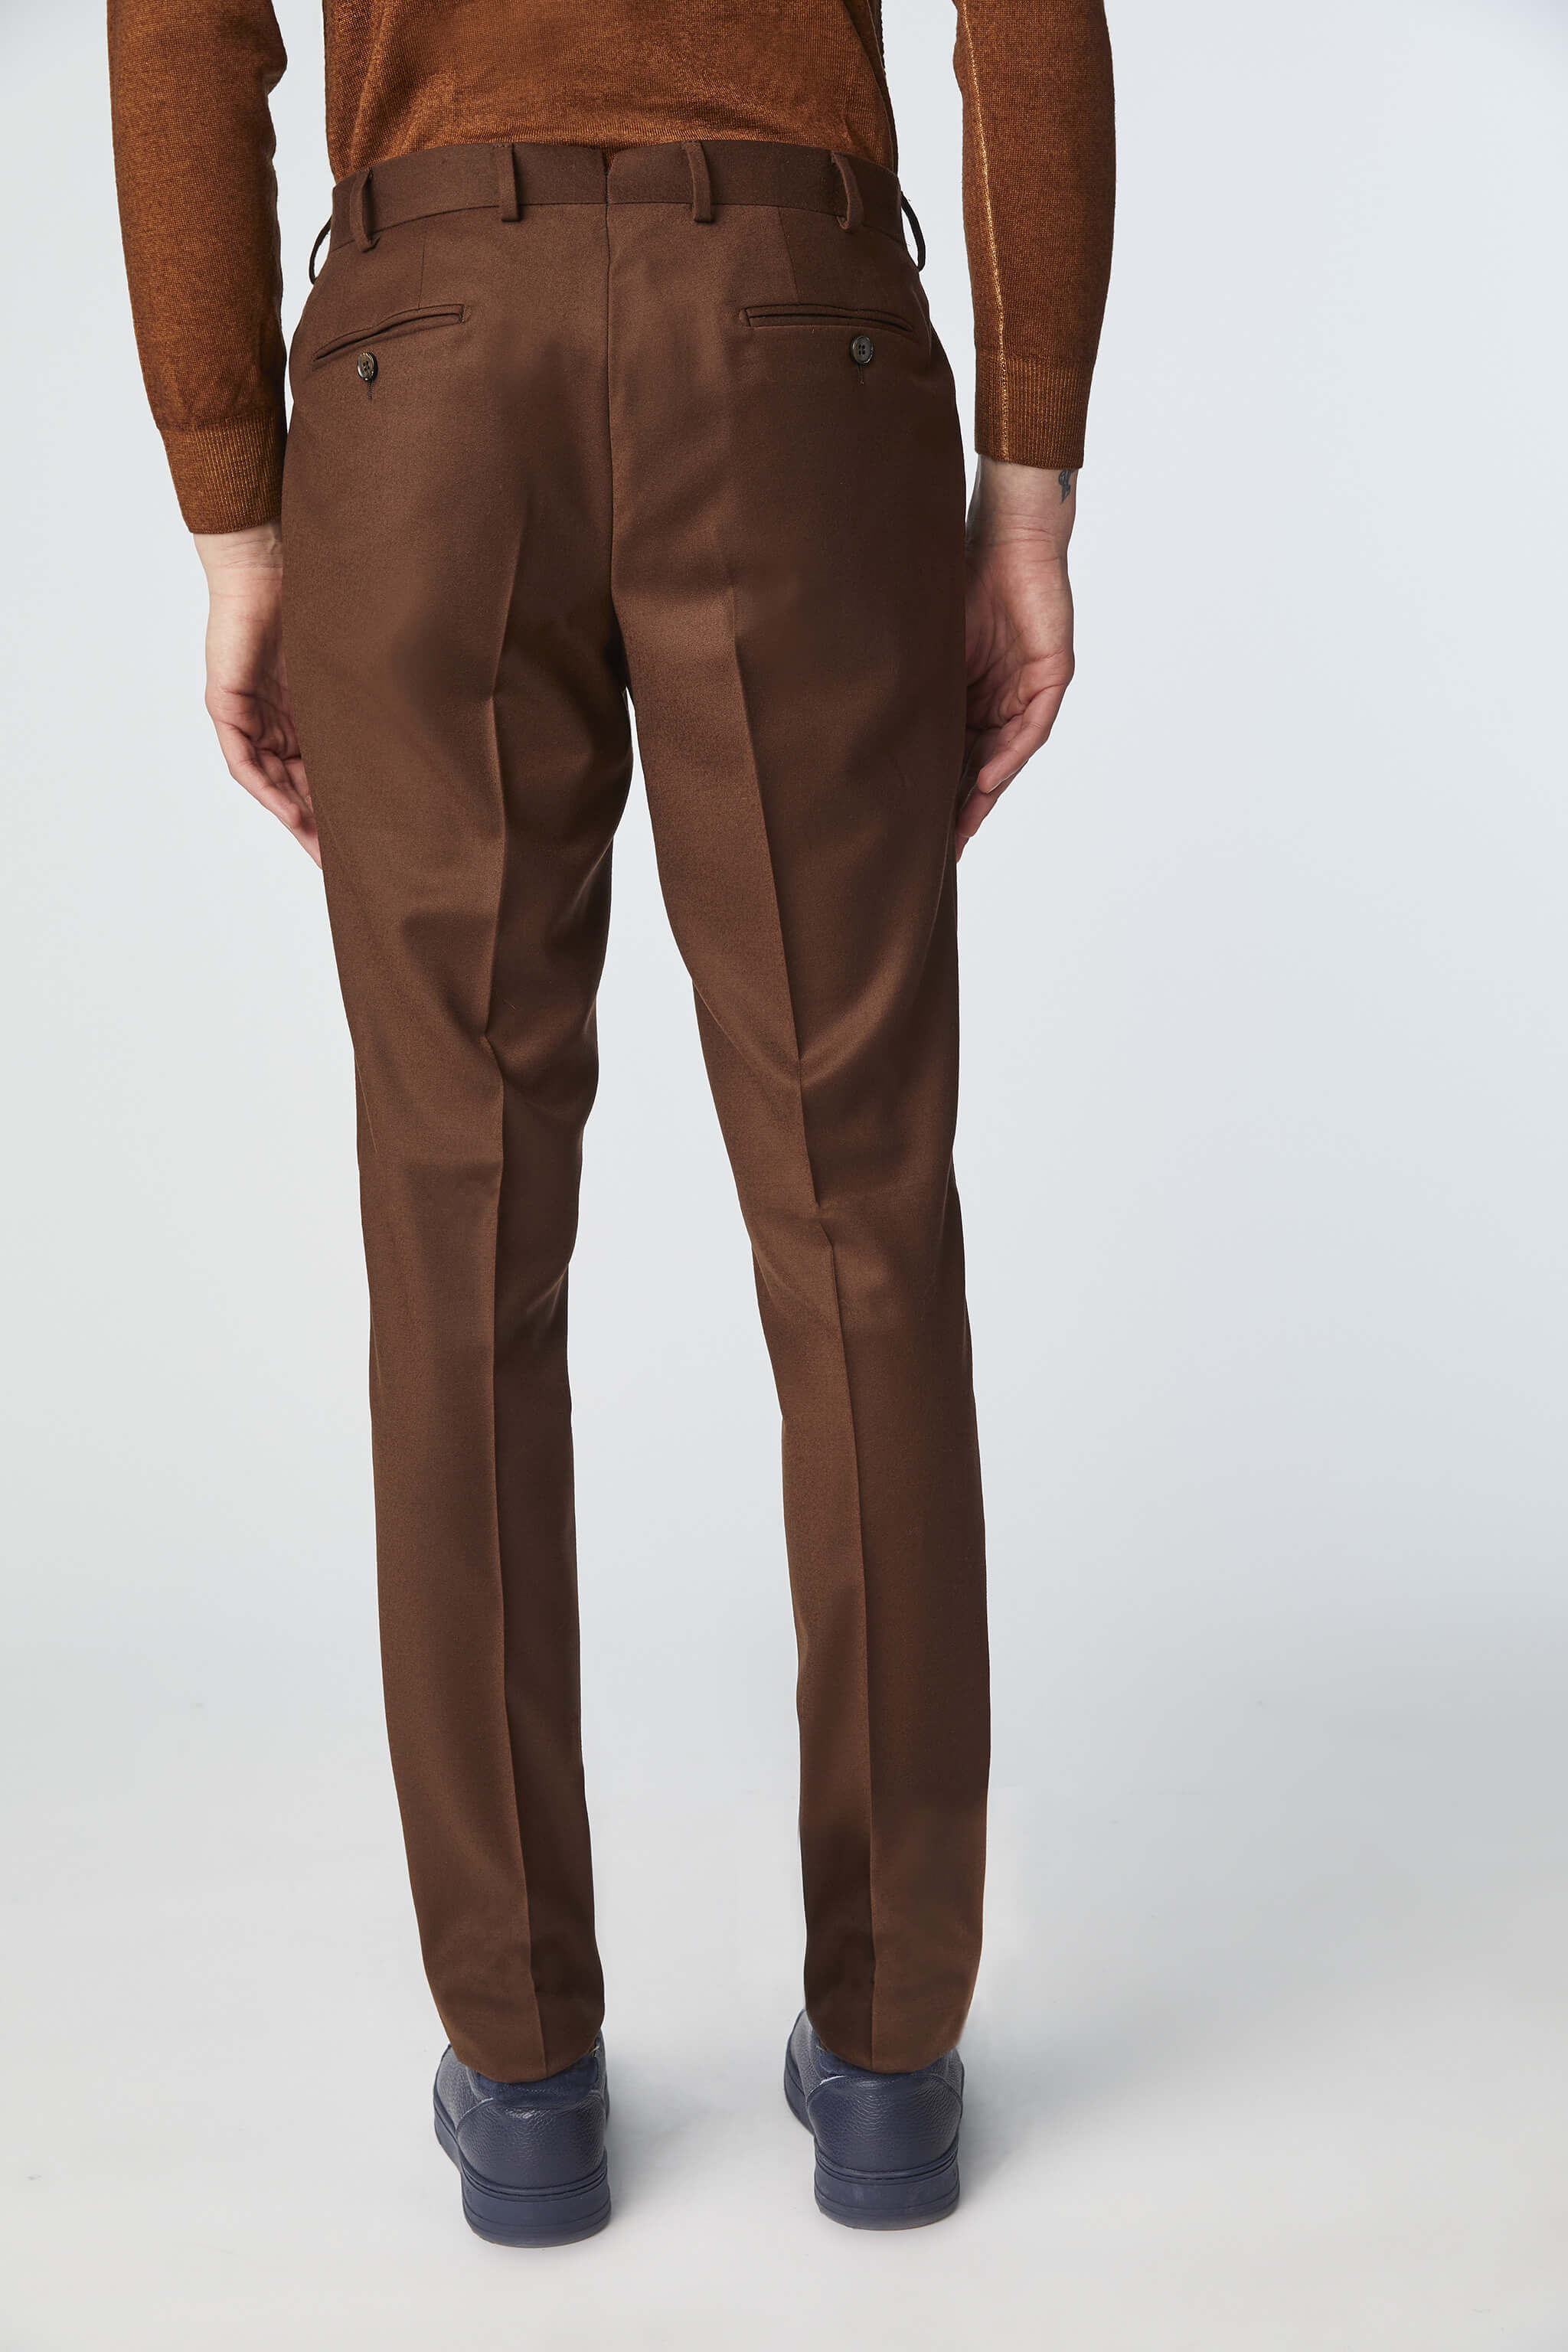 Drop 8 MARGARITA suit in brown